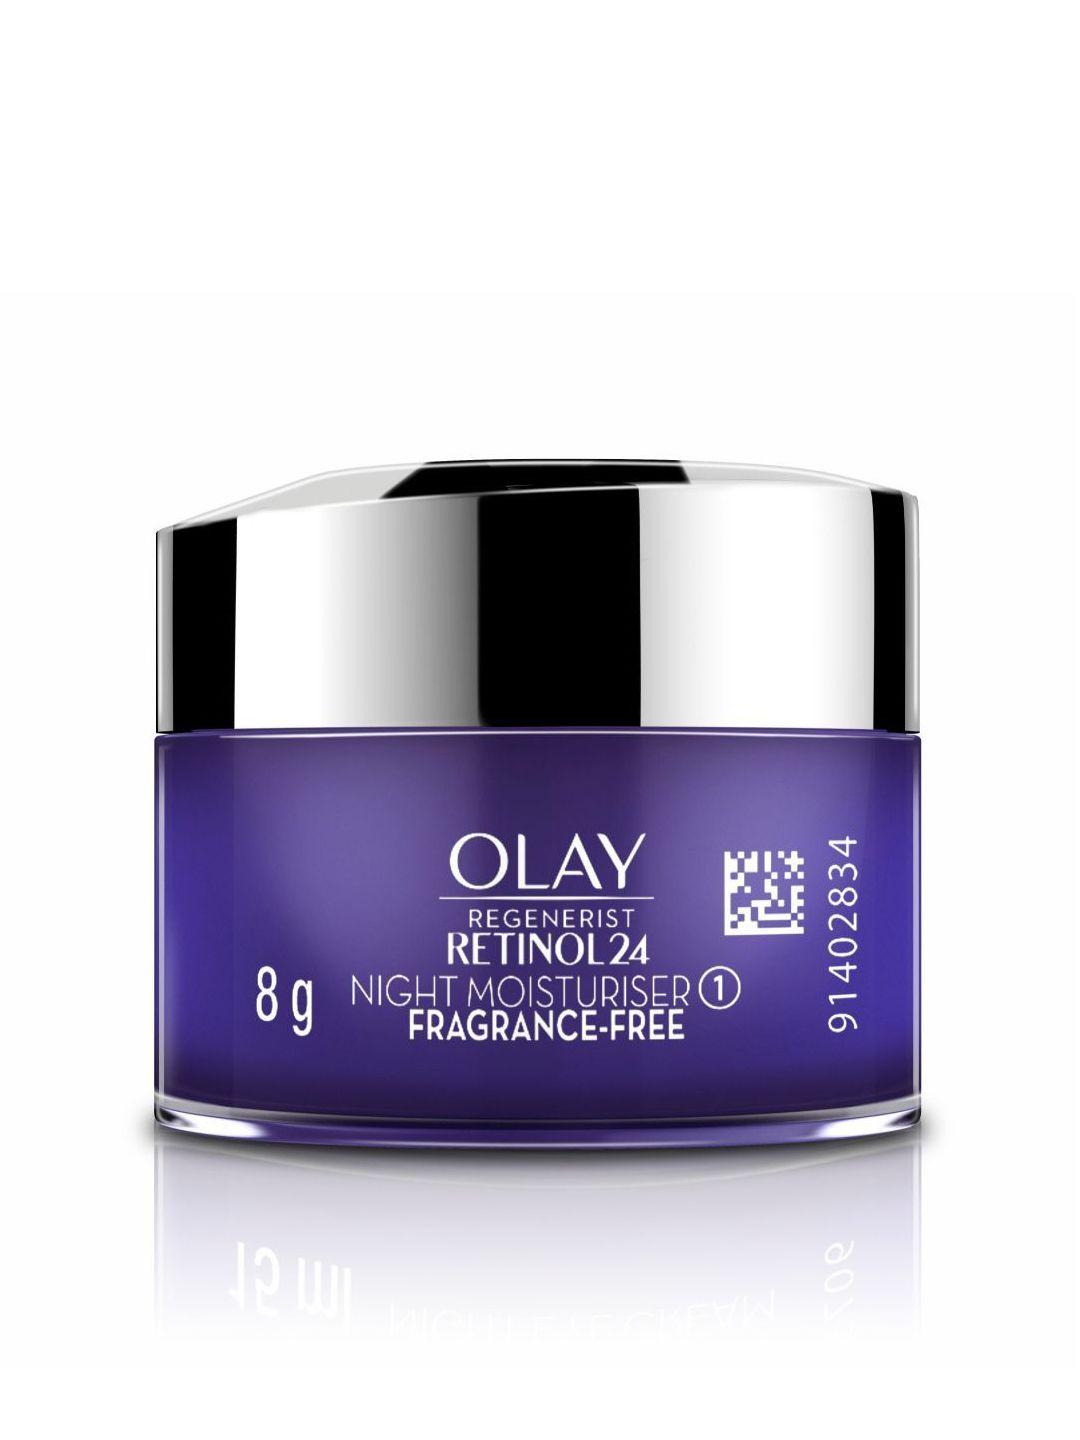 olay regenerist retinol 24 fragrance-free mini night moisturiser 8 gm